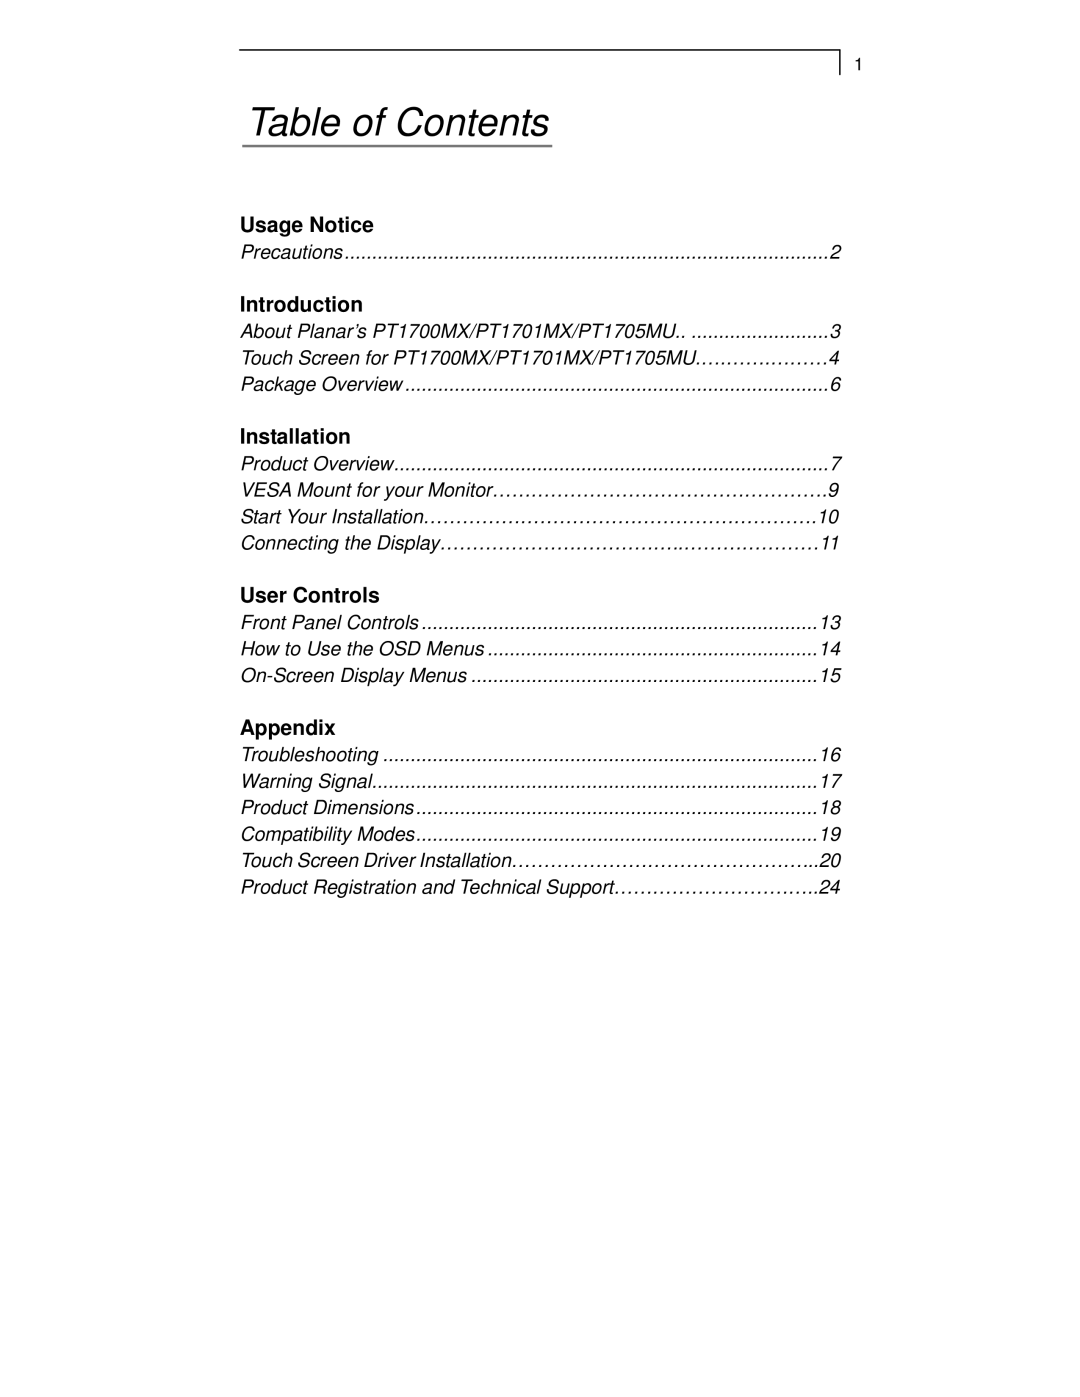 Planar PT1705MU, PT1701MX, PT1700MX manual Table of Contents 